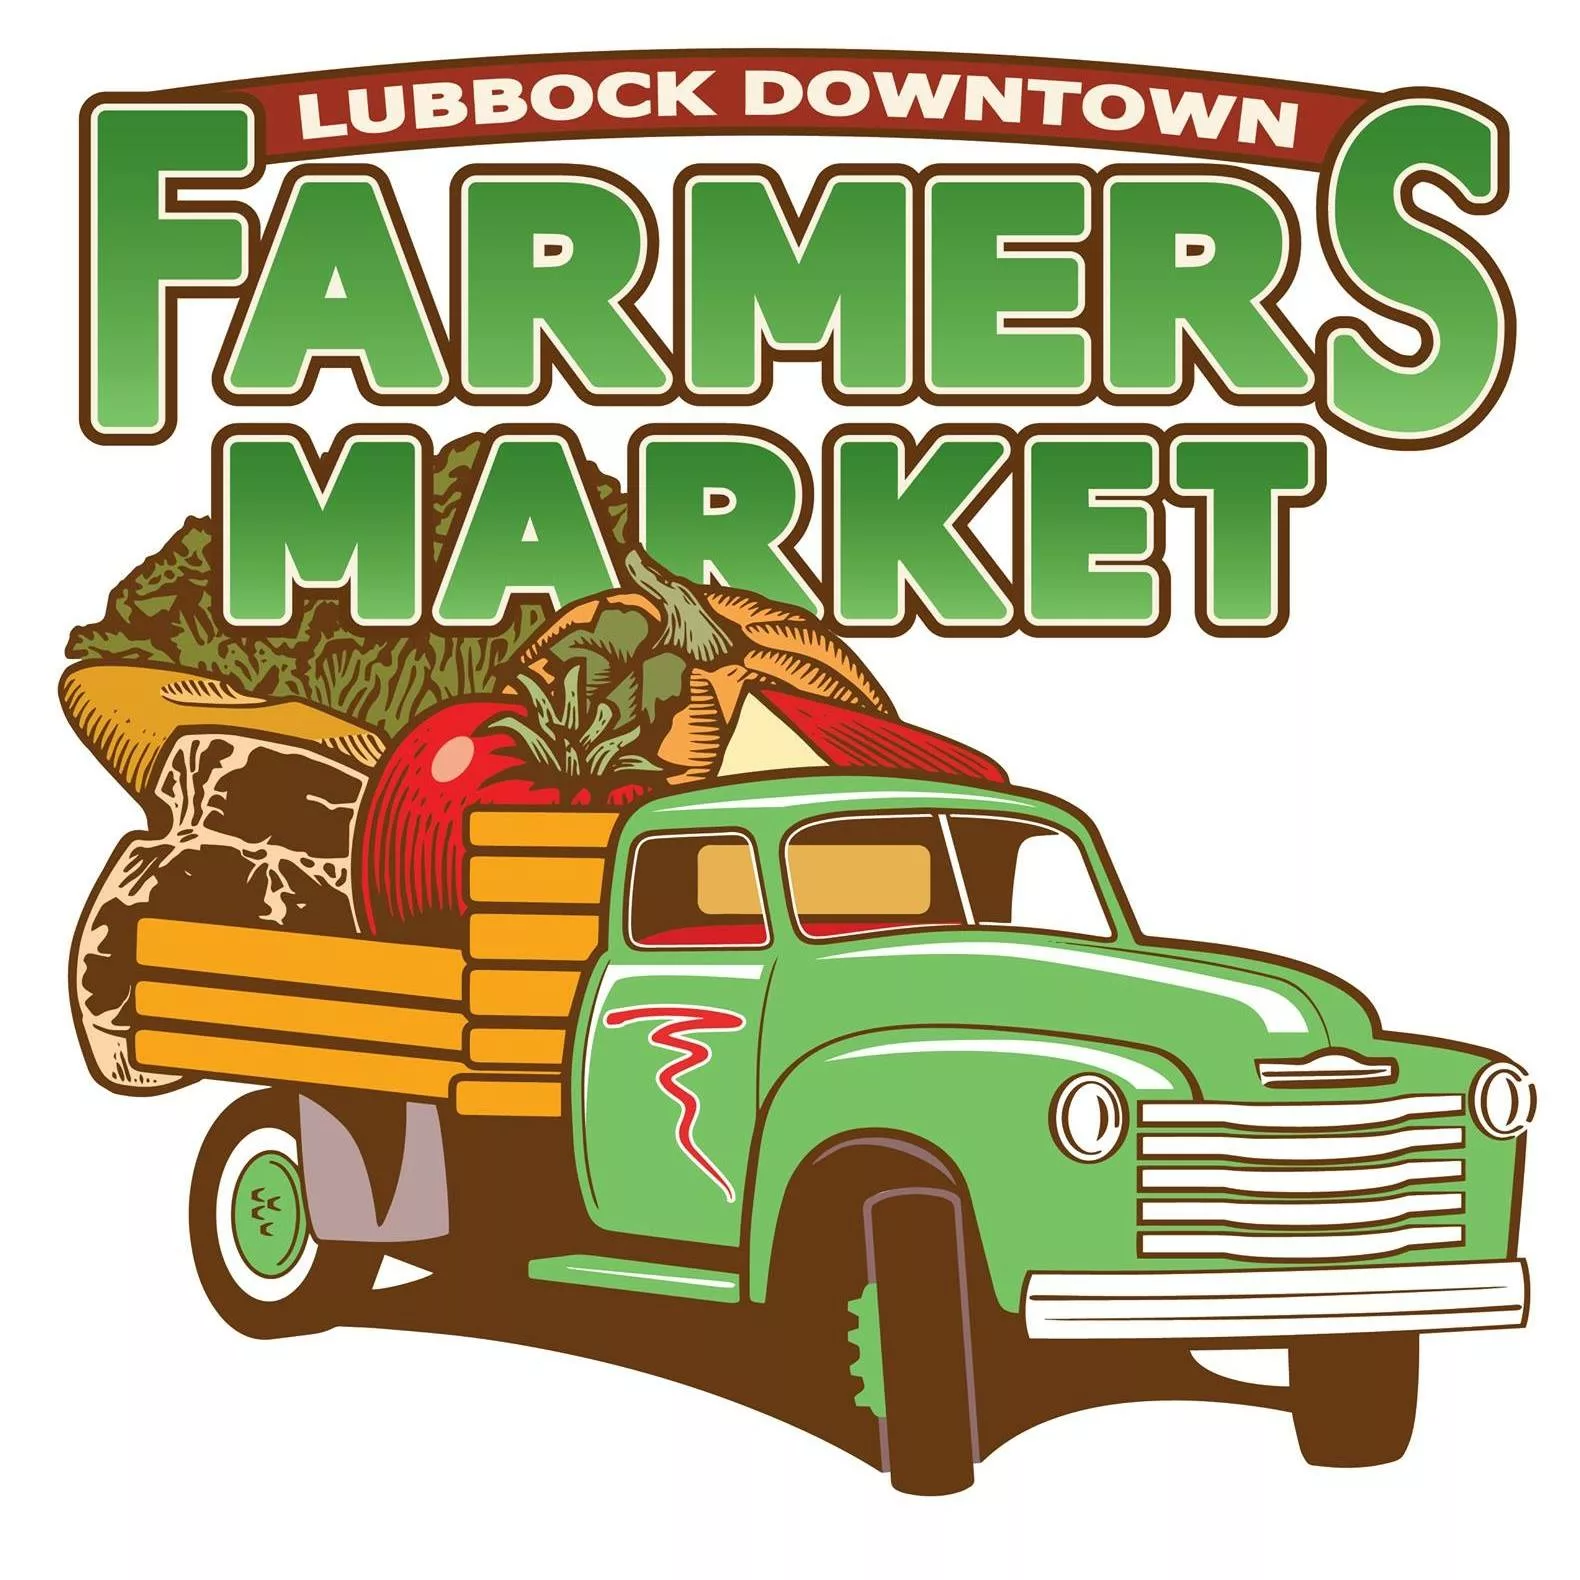 Lubbock Downtown Farmers Market LHUCA Plaza Good Stuff LBK